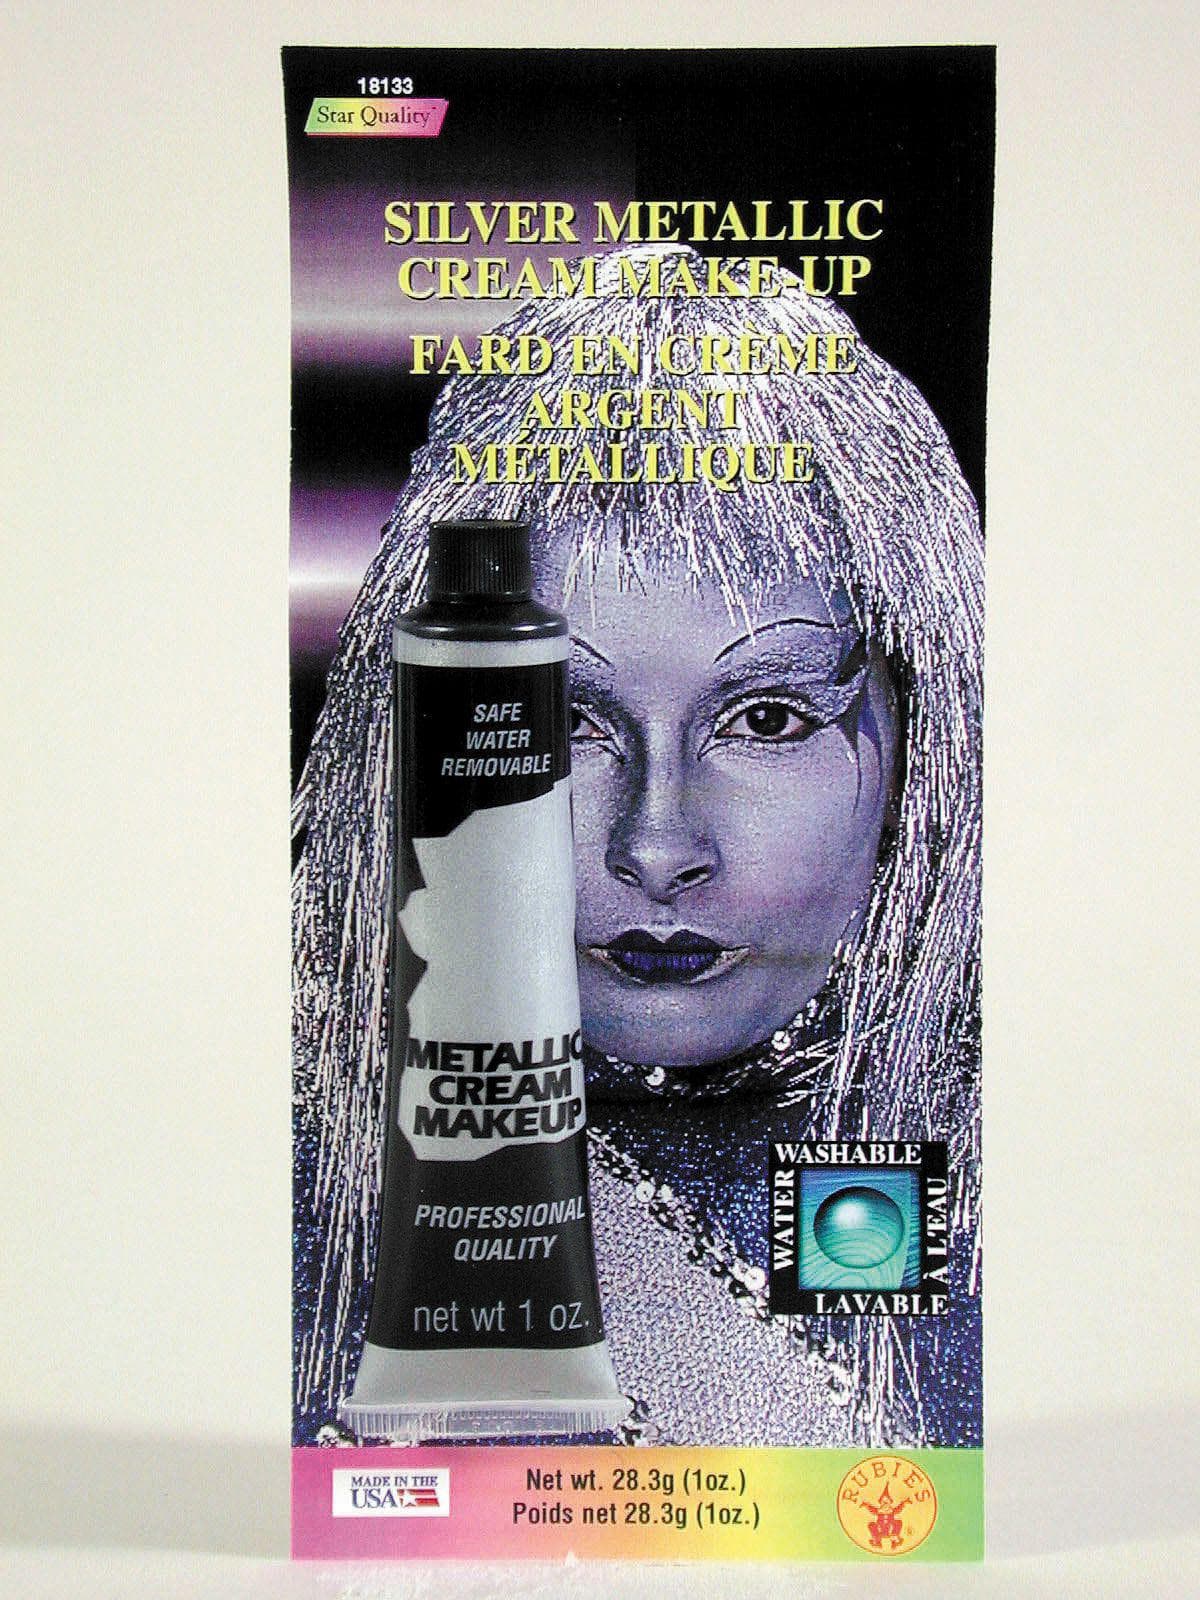 Adult Silver Metallic Cream Makeup - costumes.com